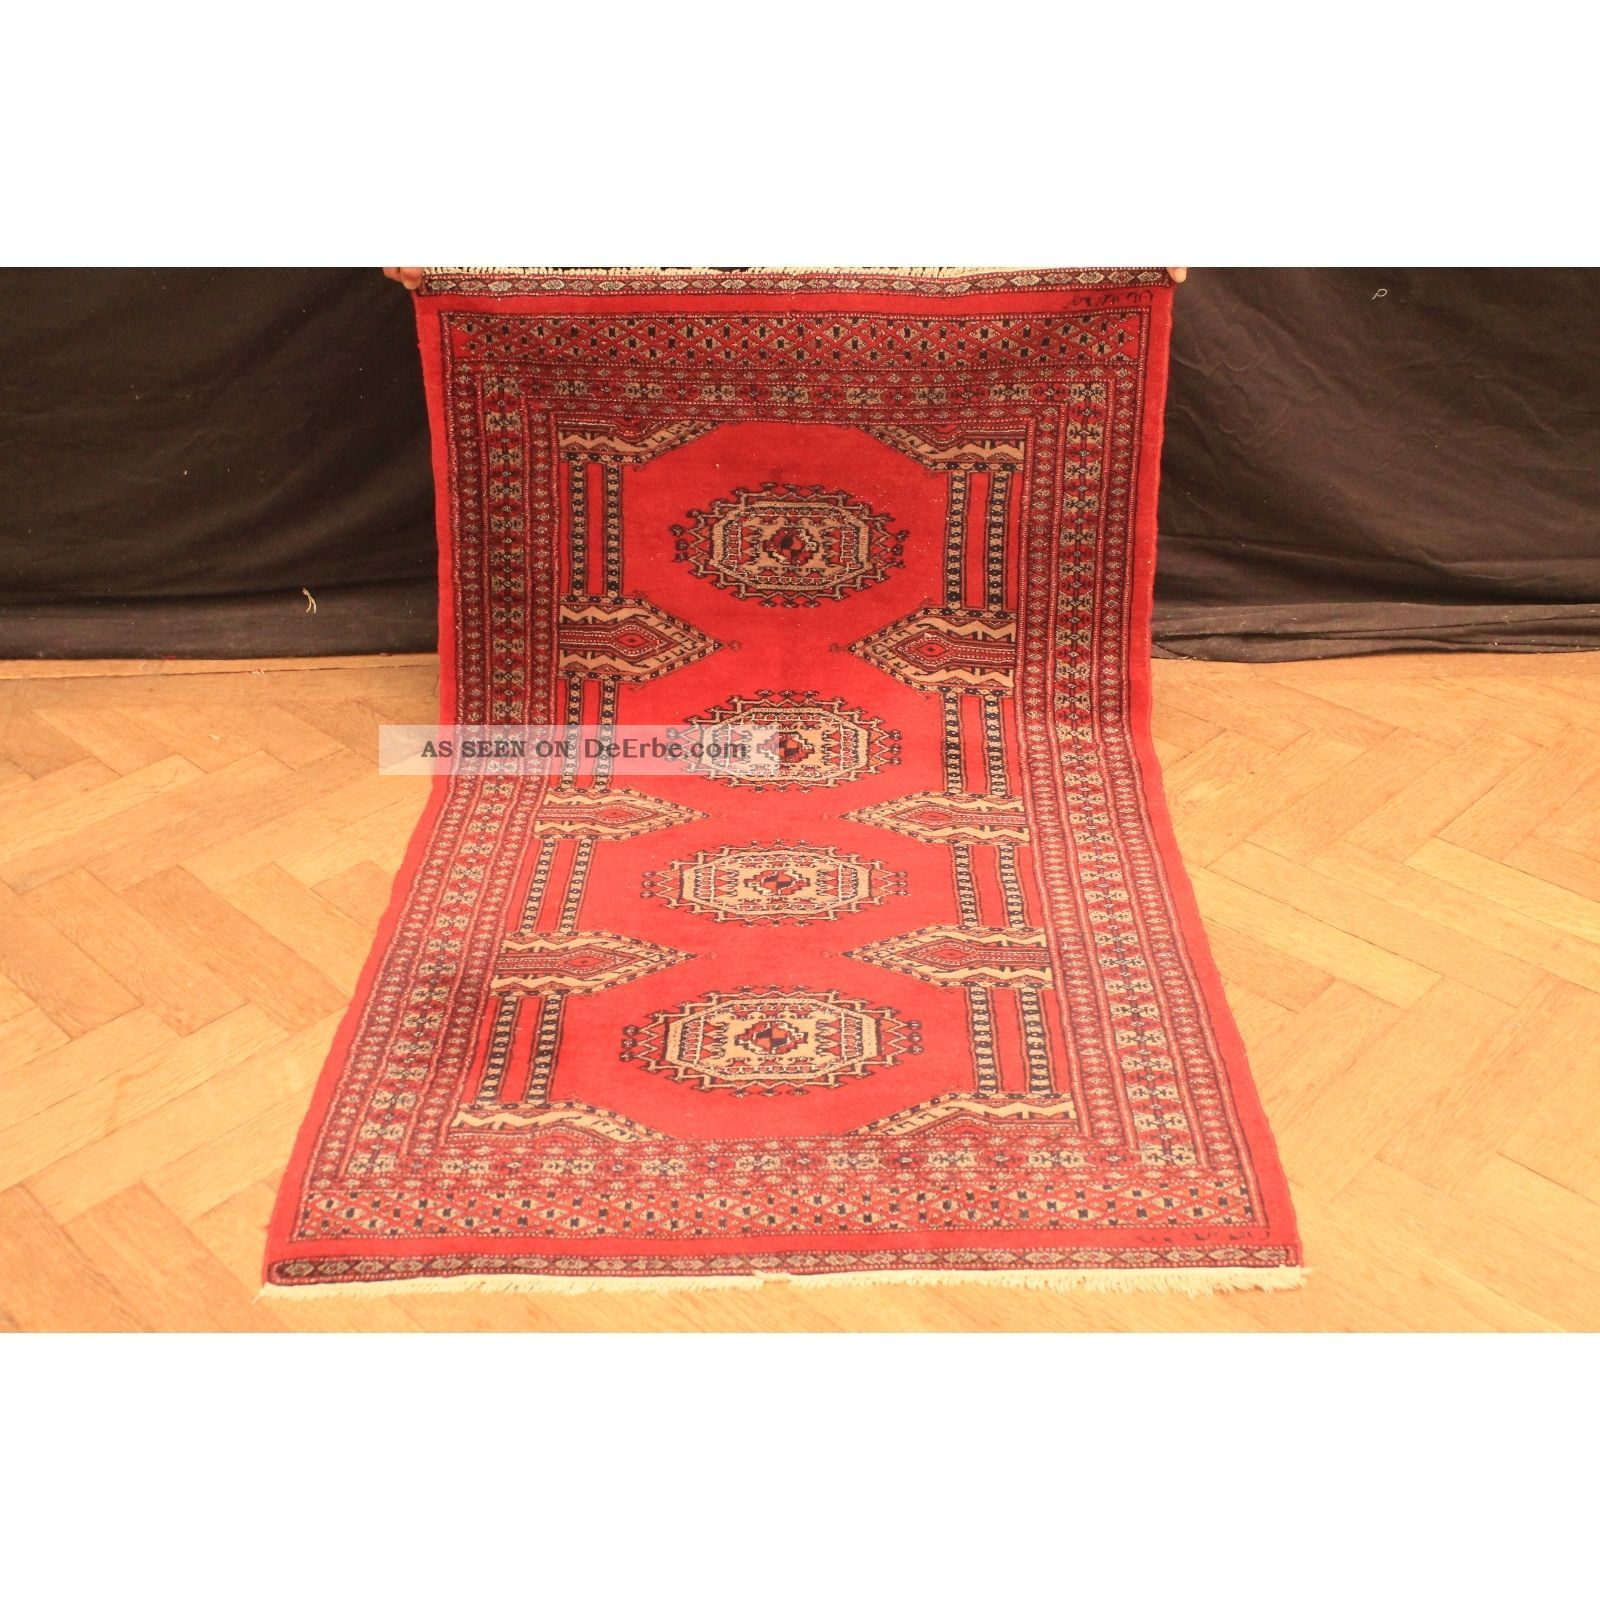 Fein Handgeknüpfter Orient Buchara Jomut Teppich Carpet Tappeto Tapis 95x160cm Teppiche & Flachgewebe Bild